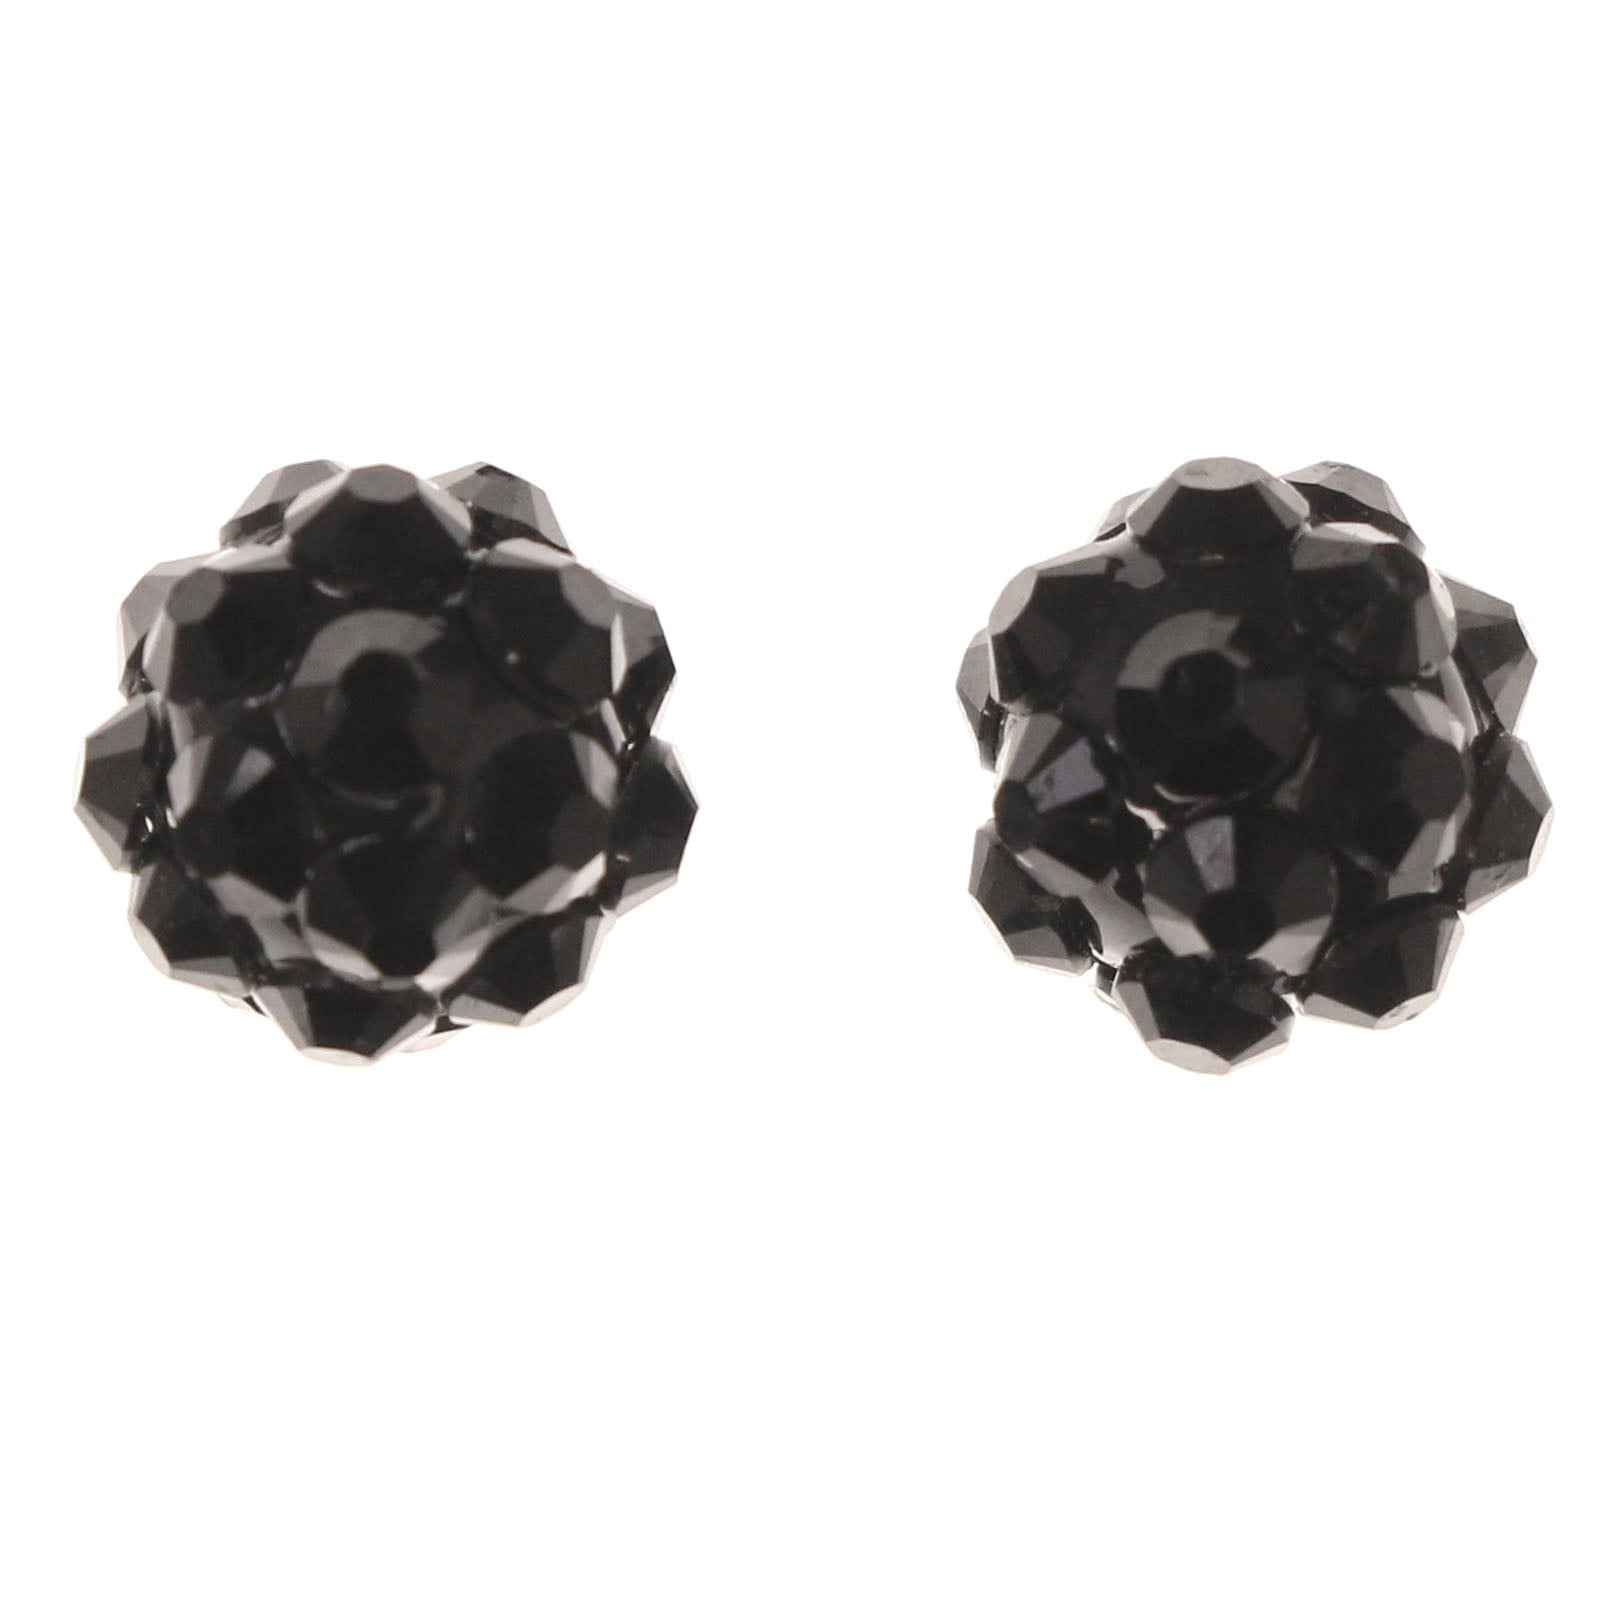 HJ4 Black Rhinestone Stud Earrings Surgical Steel Studs Small Black Rhinestone Studs Black Earrings Black Glass Studs